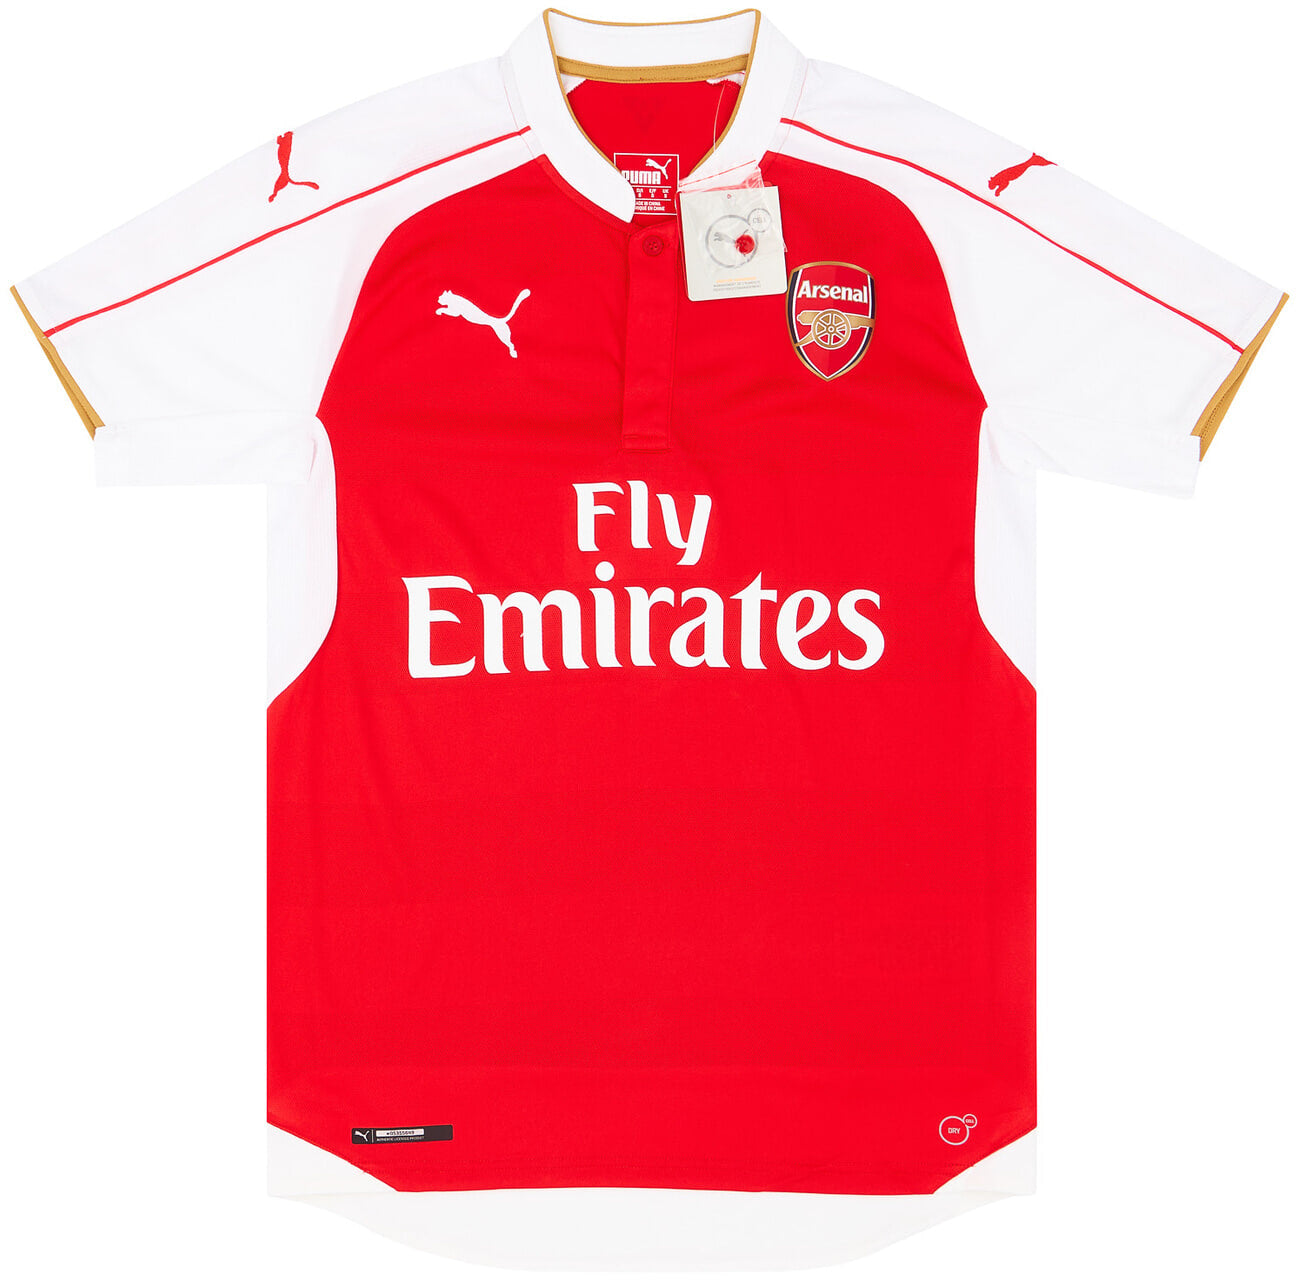 15-16 Arsenal Home Shirt - mysteryjerseys.ca